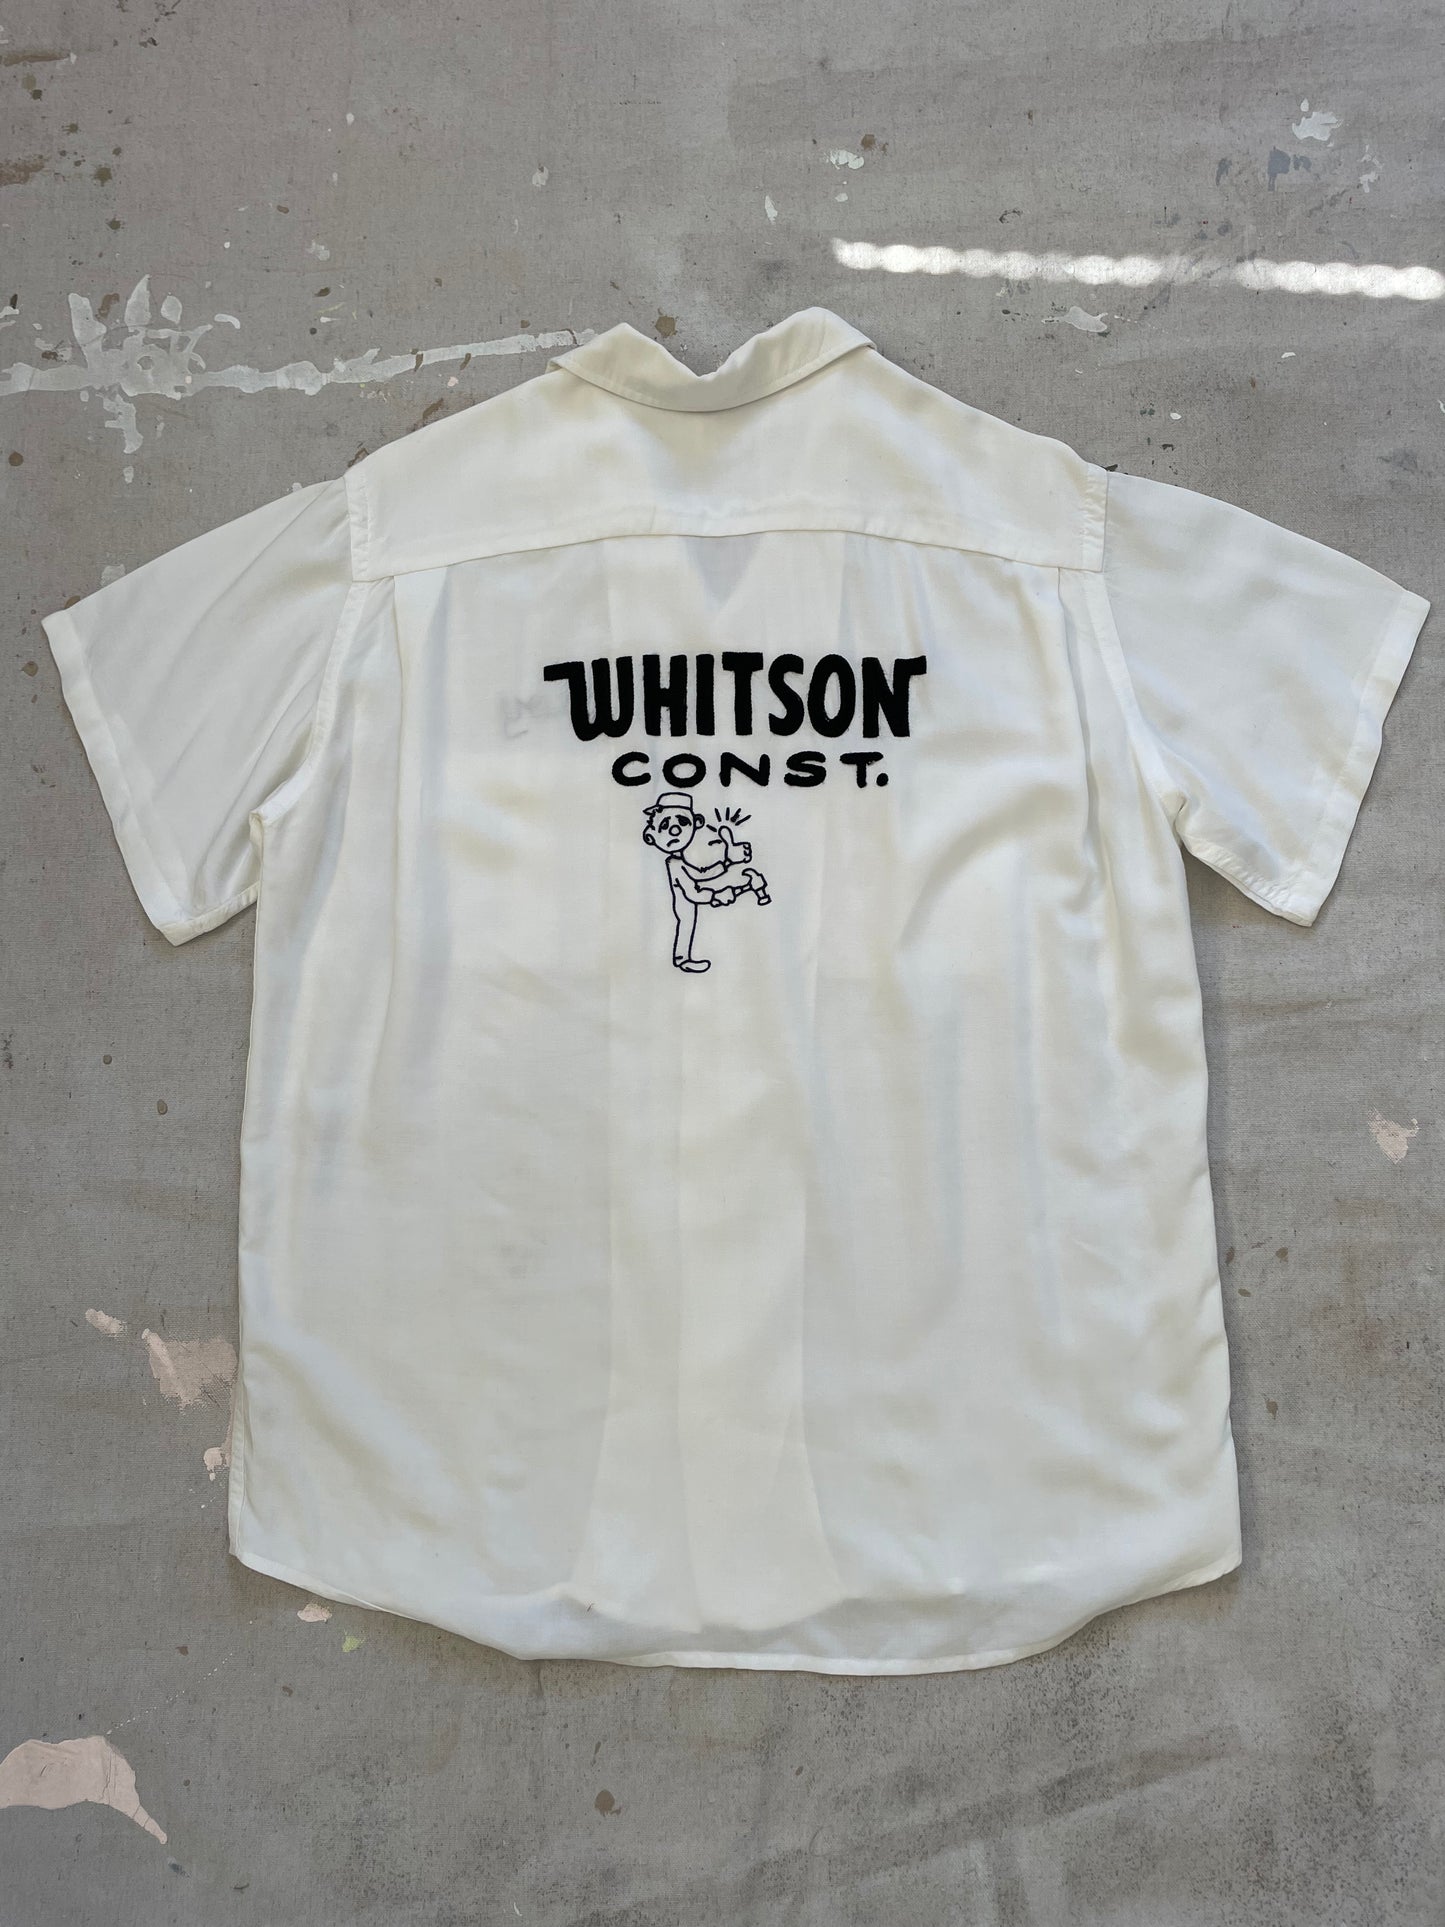 Whitson Construction Bowling Shirt